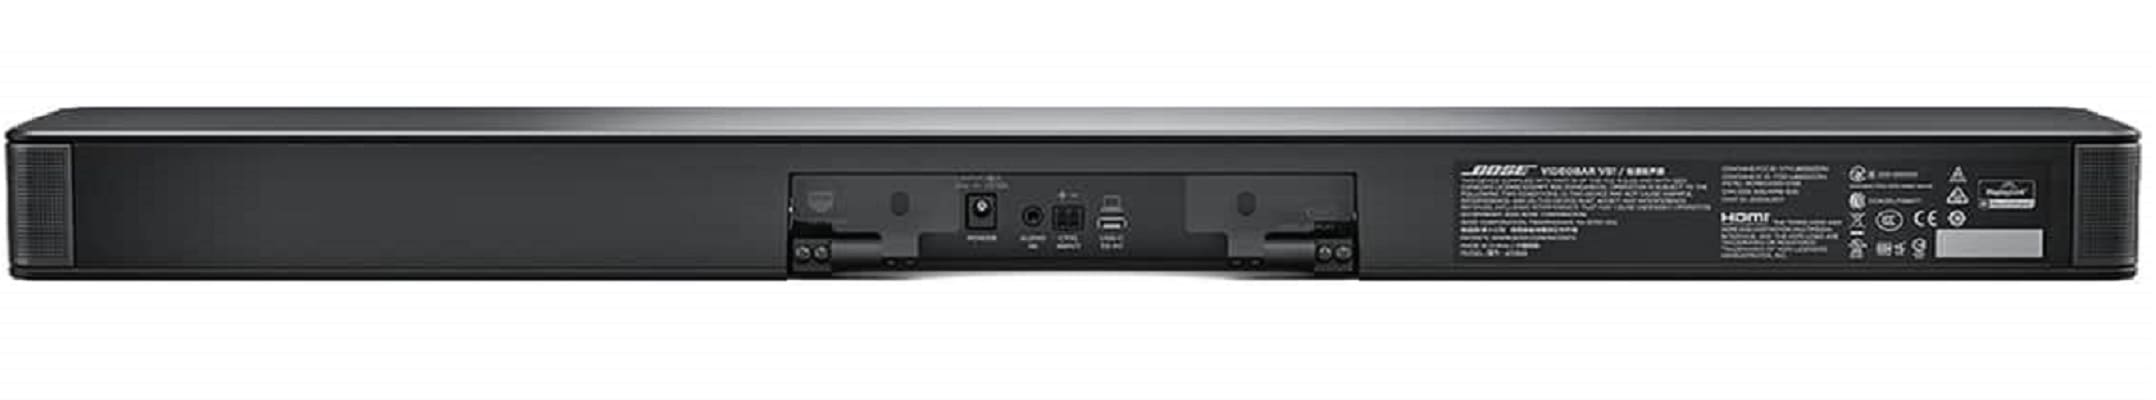 Система ВКС Bose Videobar VB1